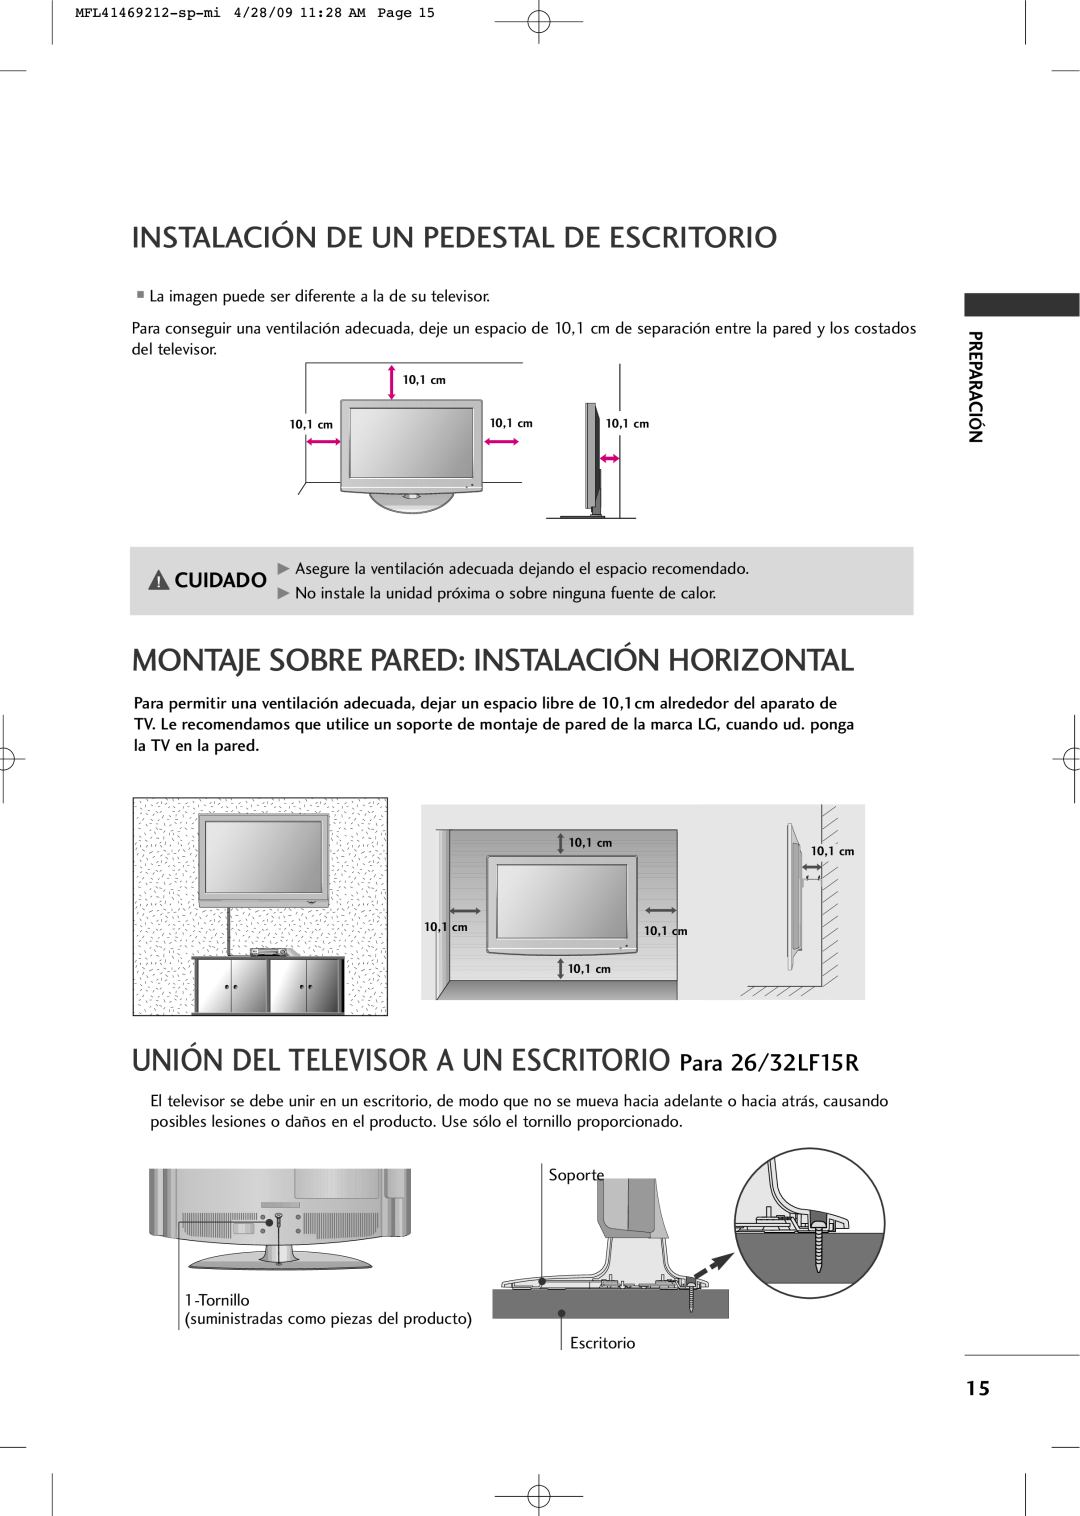 LG Electronics 2230R-MA manual Montaje Sobre Pared Instalación Horizontal, Instalación De Un Pedestal De Escritorio 